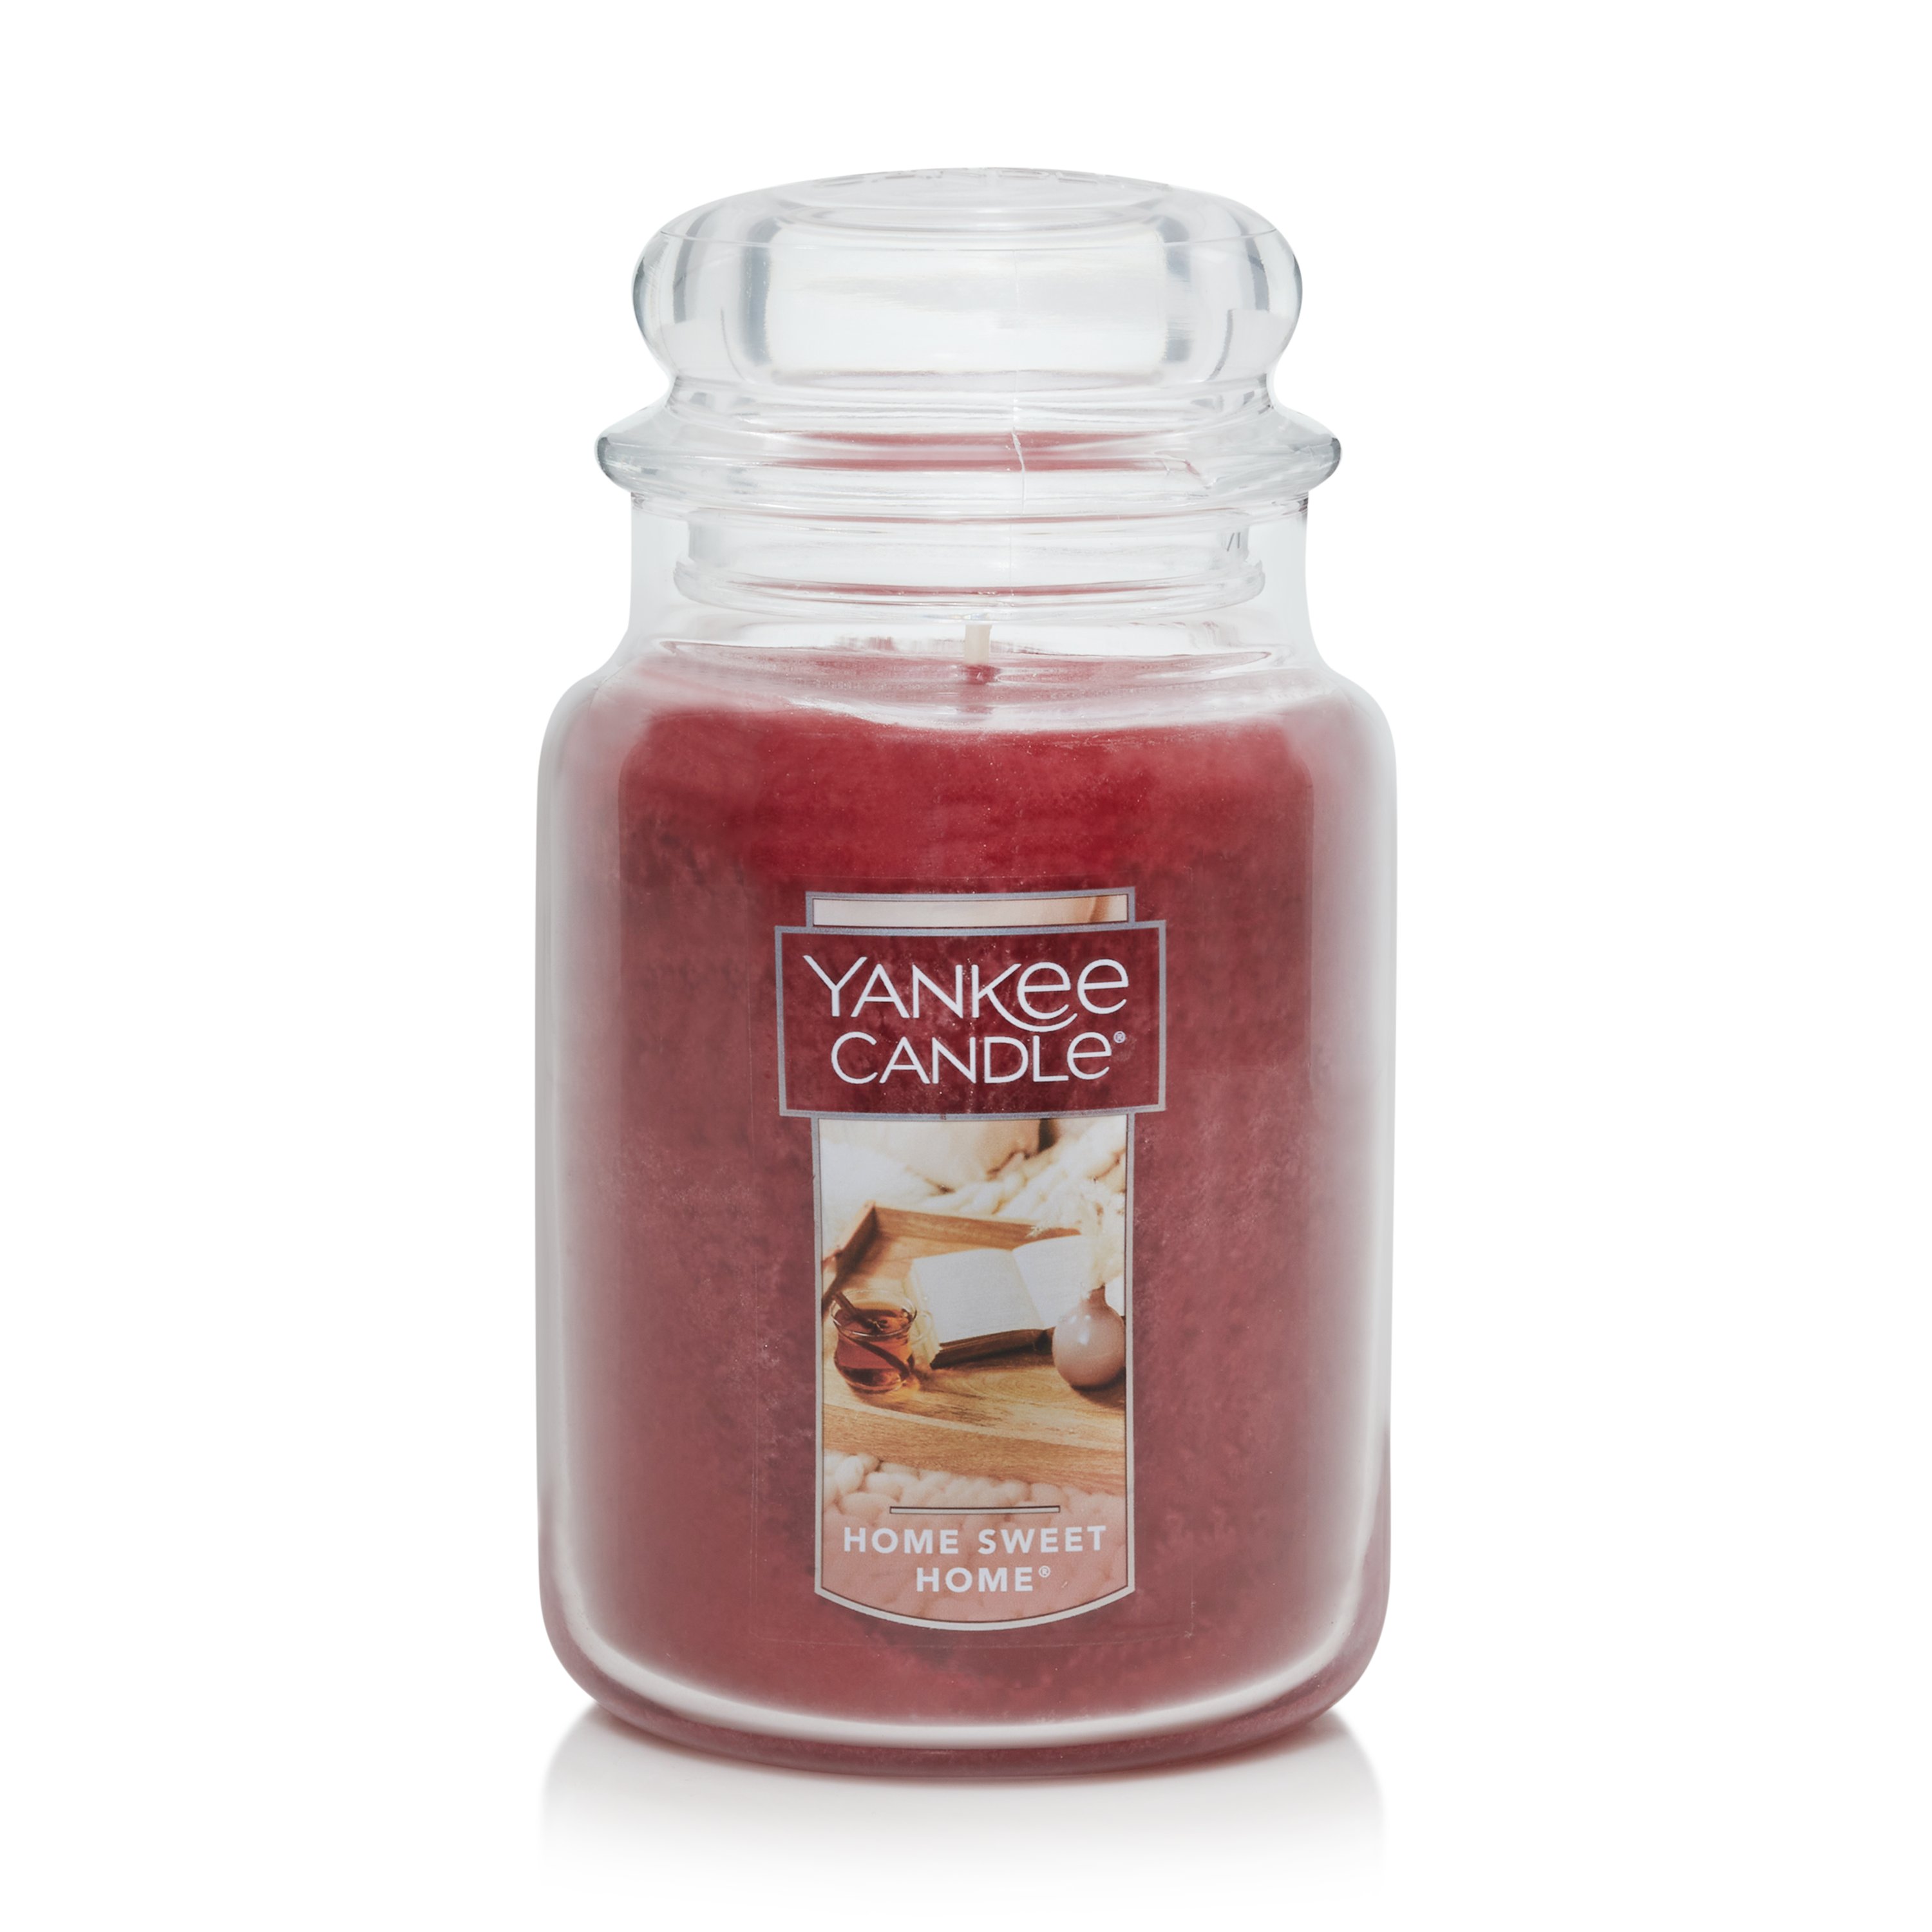 Choice 10 Fragrance Yankee Candle Home Inspiration Medium Jars